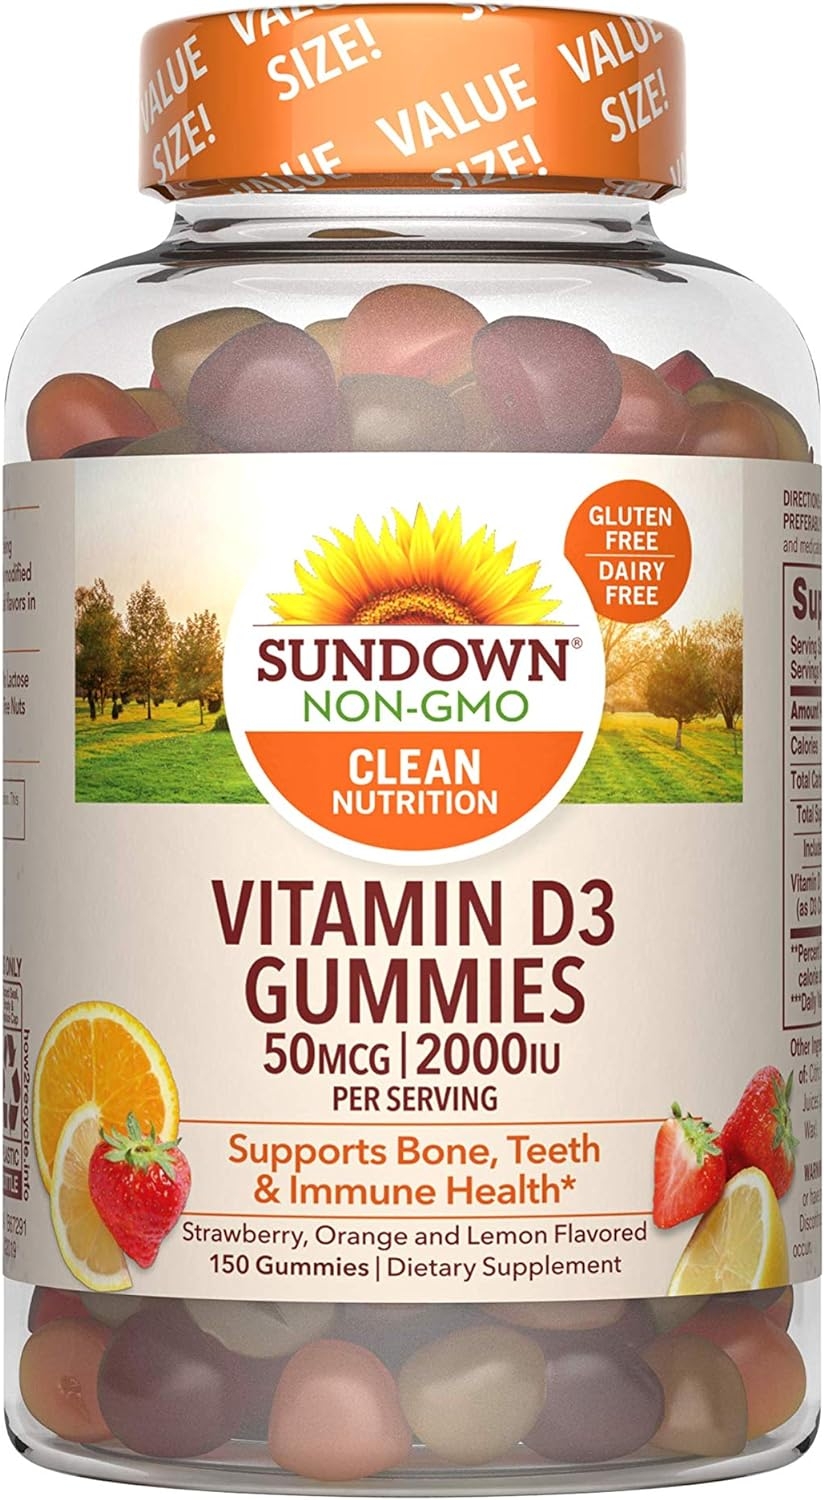 Sundown Vitamin D3 50mcg 2000IU Gummies for Immune Support, Non-GMO, Dairy-Free, Gluten-Free, Naturally Flavored, 90 Count